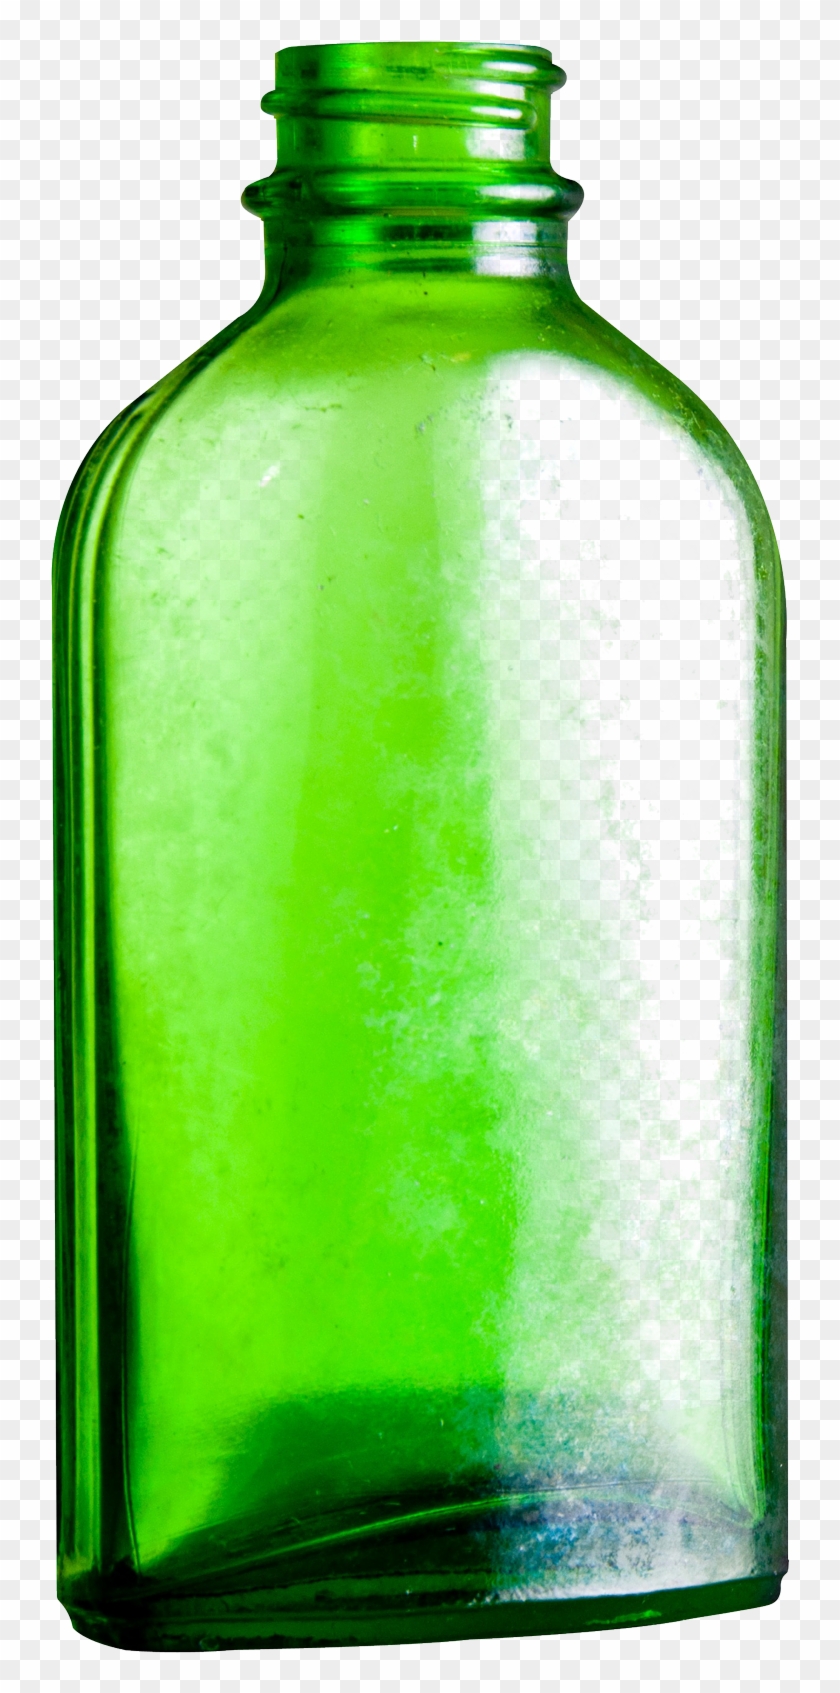 Empty Glass Bottle Png Image - Green Glass Bottle Transparent #1092177